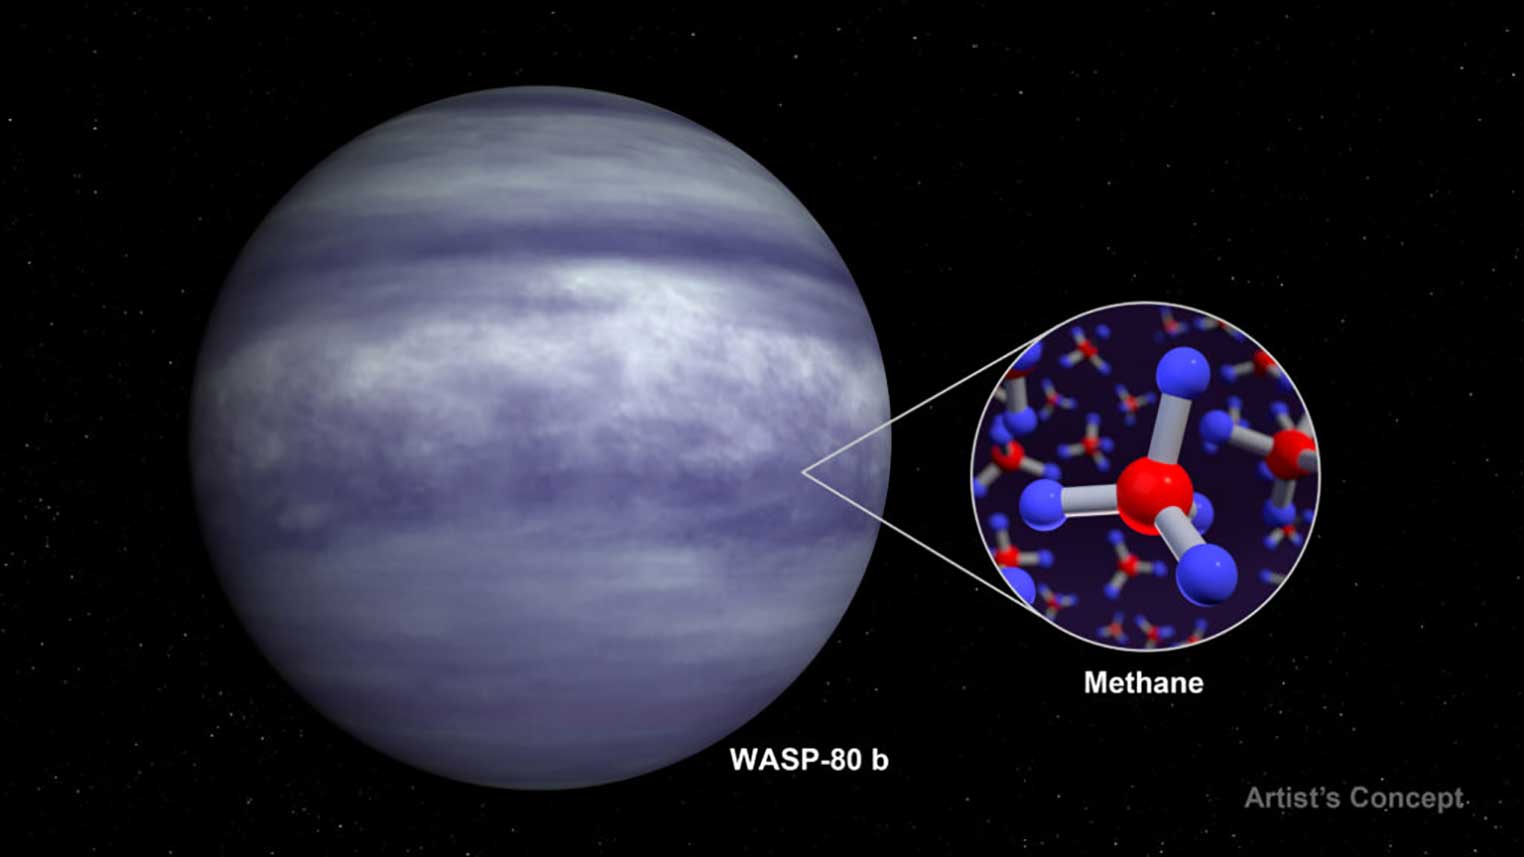 Hot exoplanet WASP-80 b